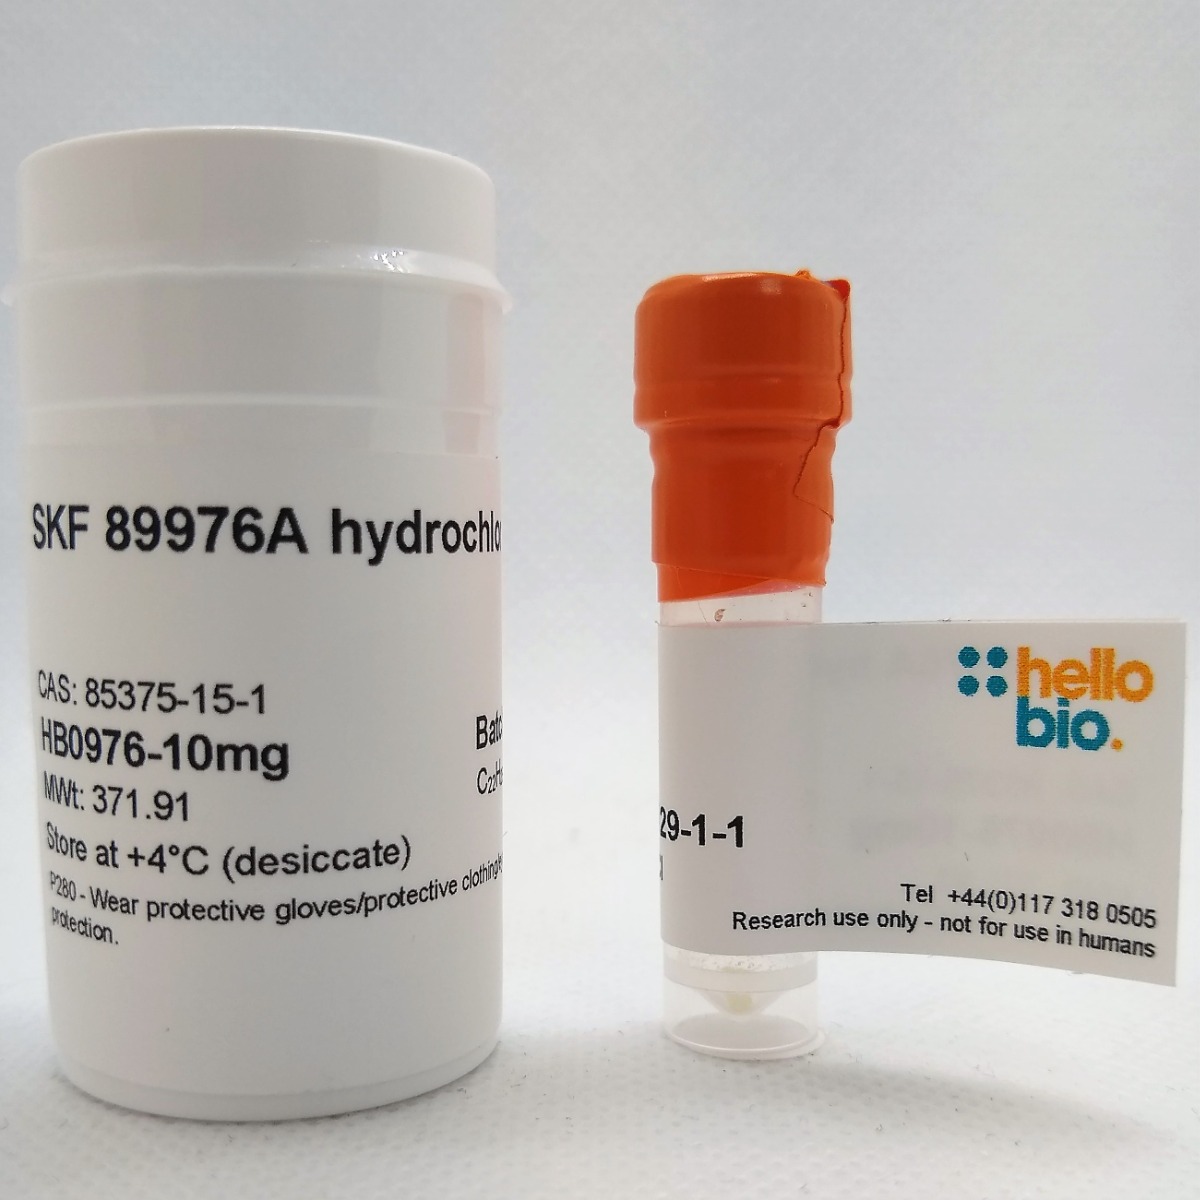 SKF 89976A hydrochloride product vial image | Hello Bio